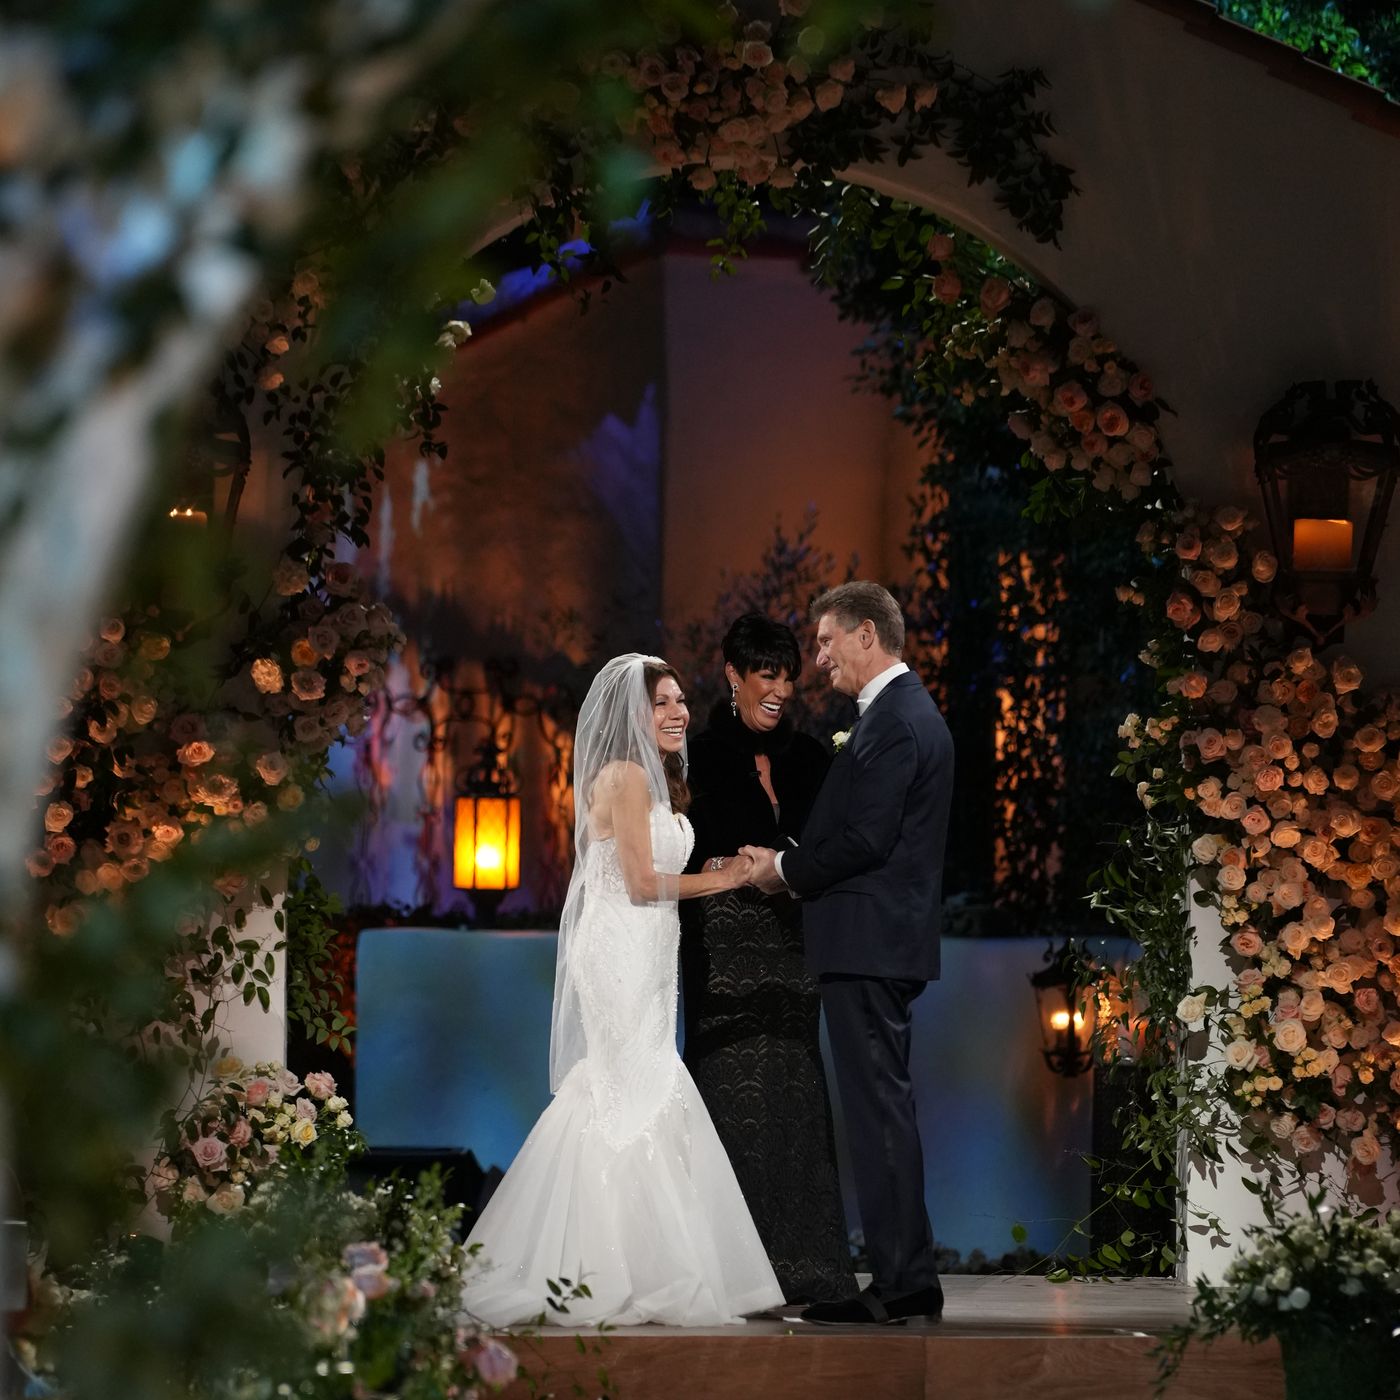 8 Unique Wedding Registries You'll Love